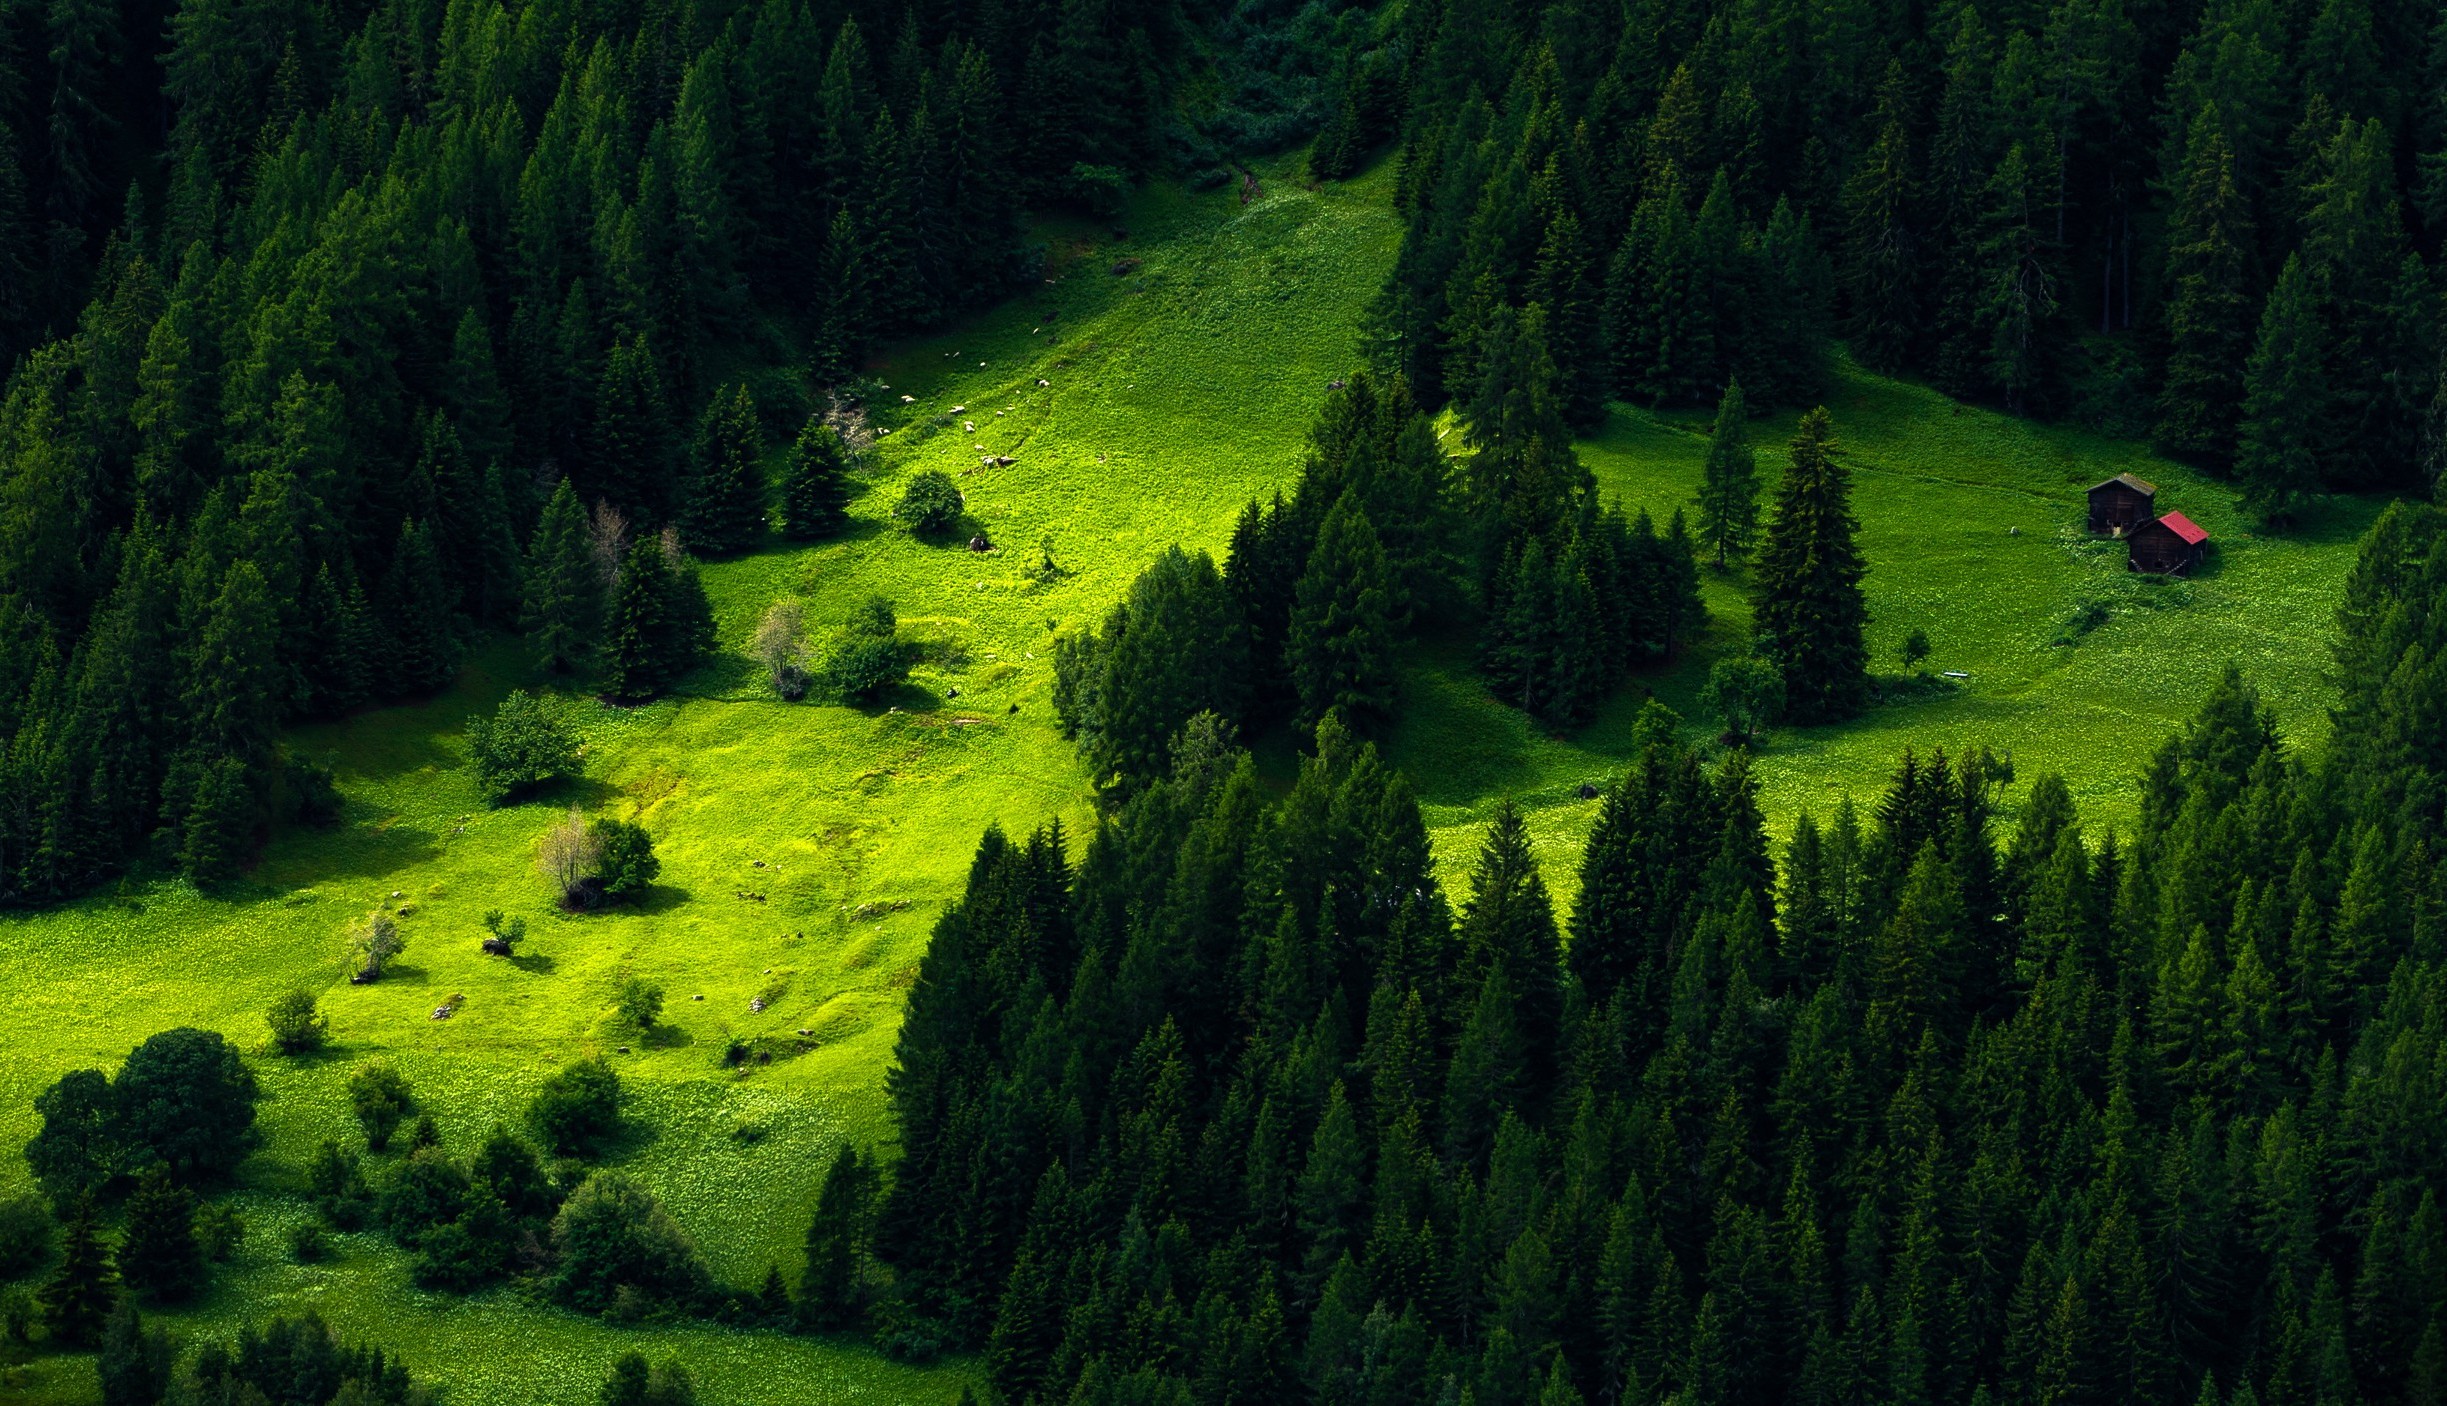 743839 descargar imagen verde, tierra/naturaleza, bosque, montaña, pino, árbol: fondos de pantalla y protectores de pantalla gratis